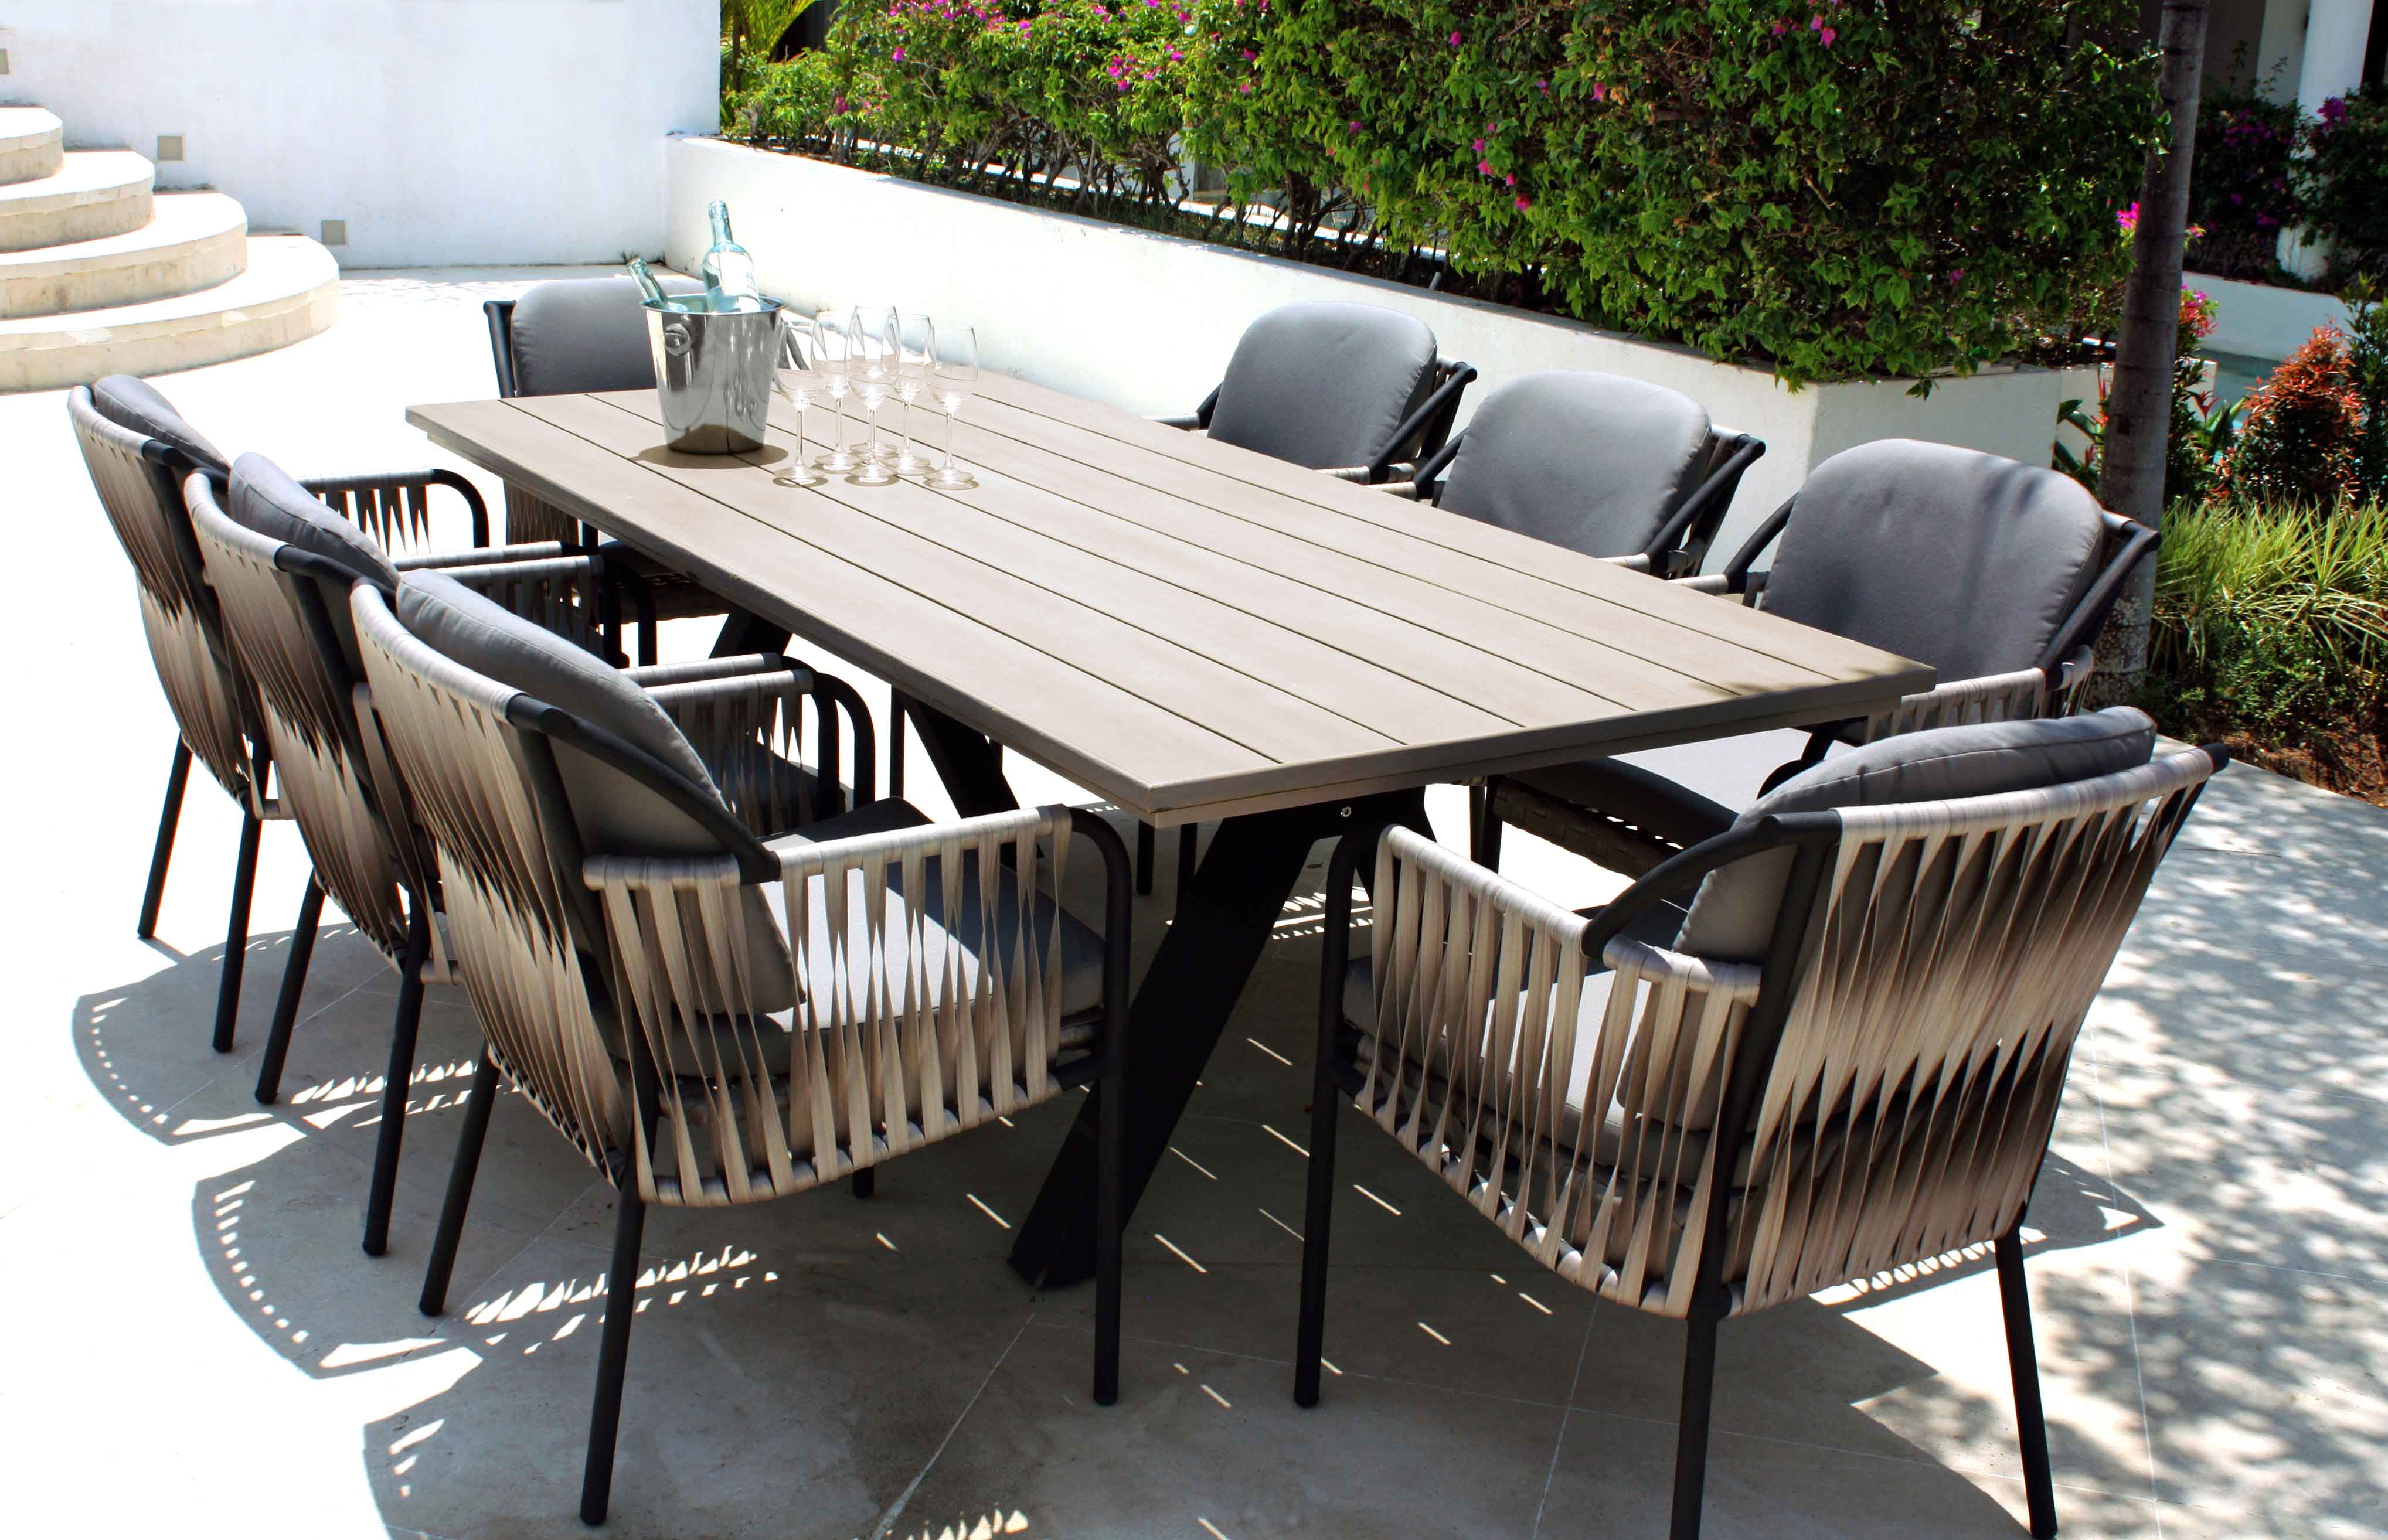 Ham Dining Table By Skyline Design, Skyline Design Outdoor Furniture Uk